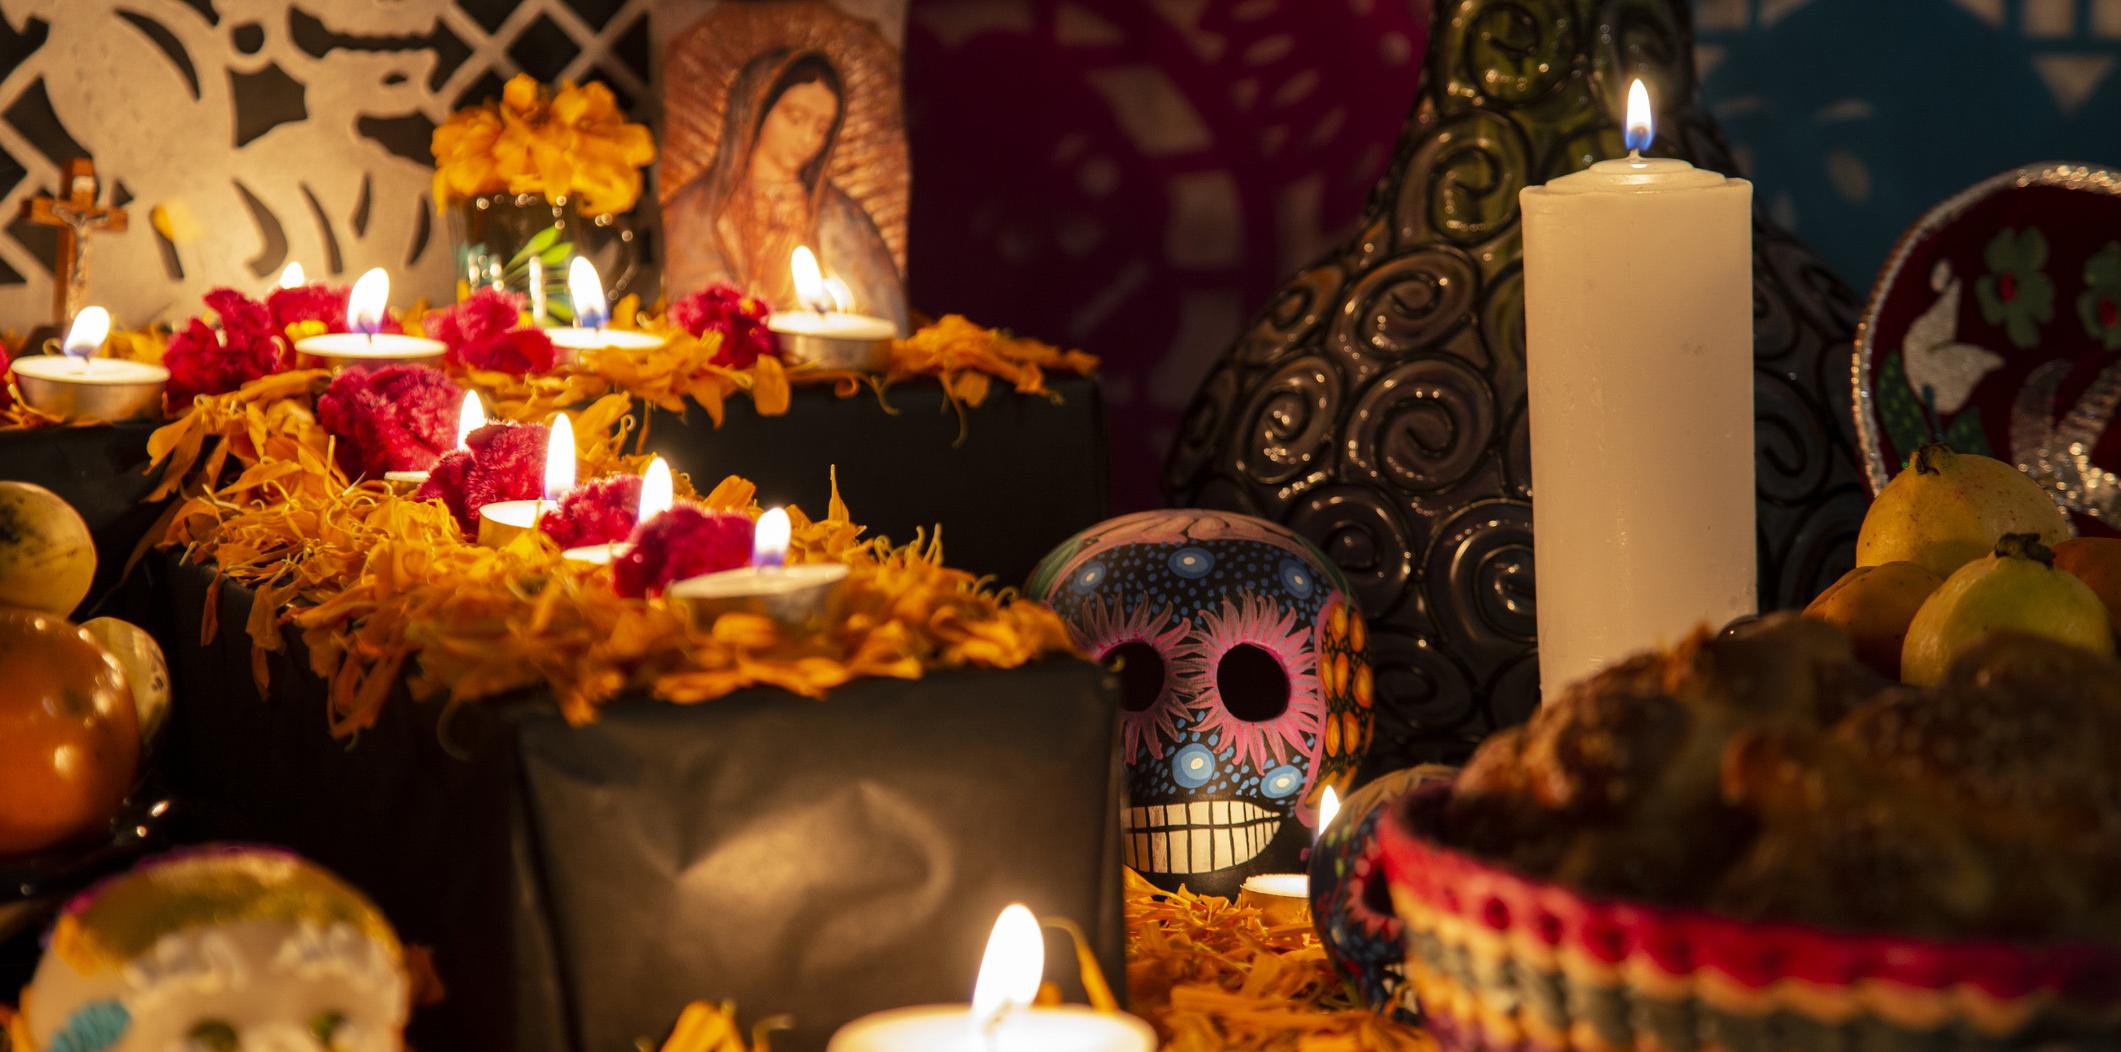 Puebla, Pue的五彩缤纷的传统亡灵节“ofrenda”上的彩色头骨.、墨西哥